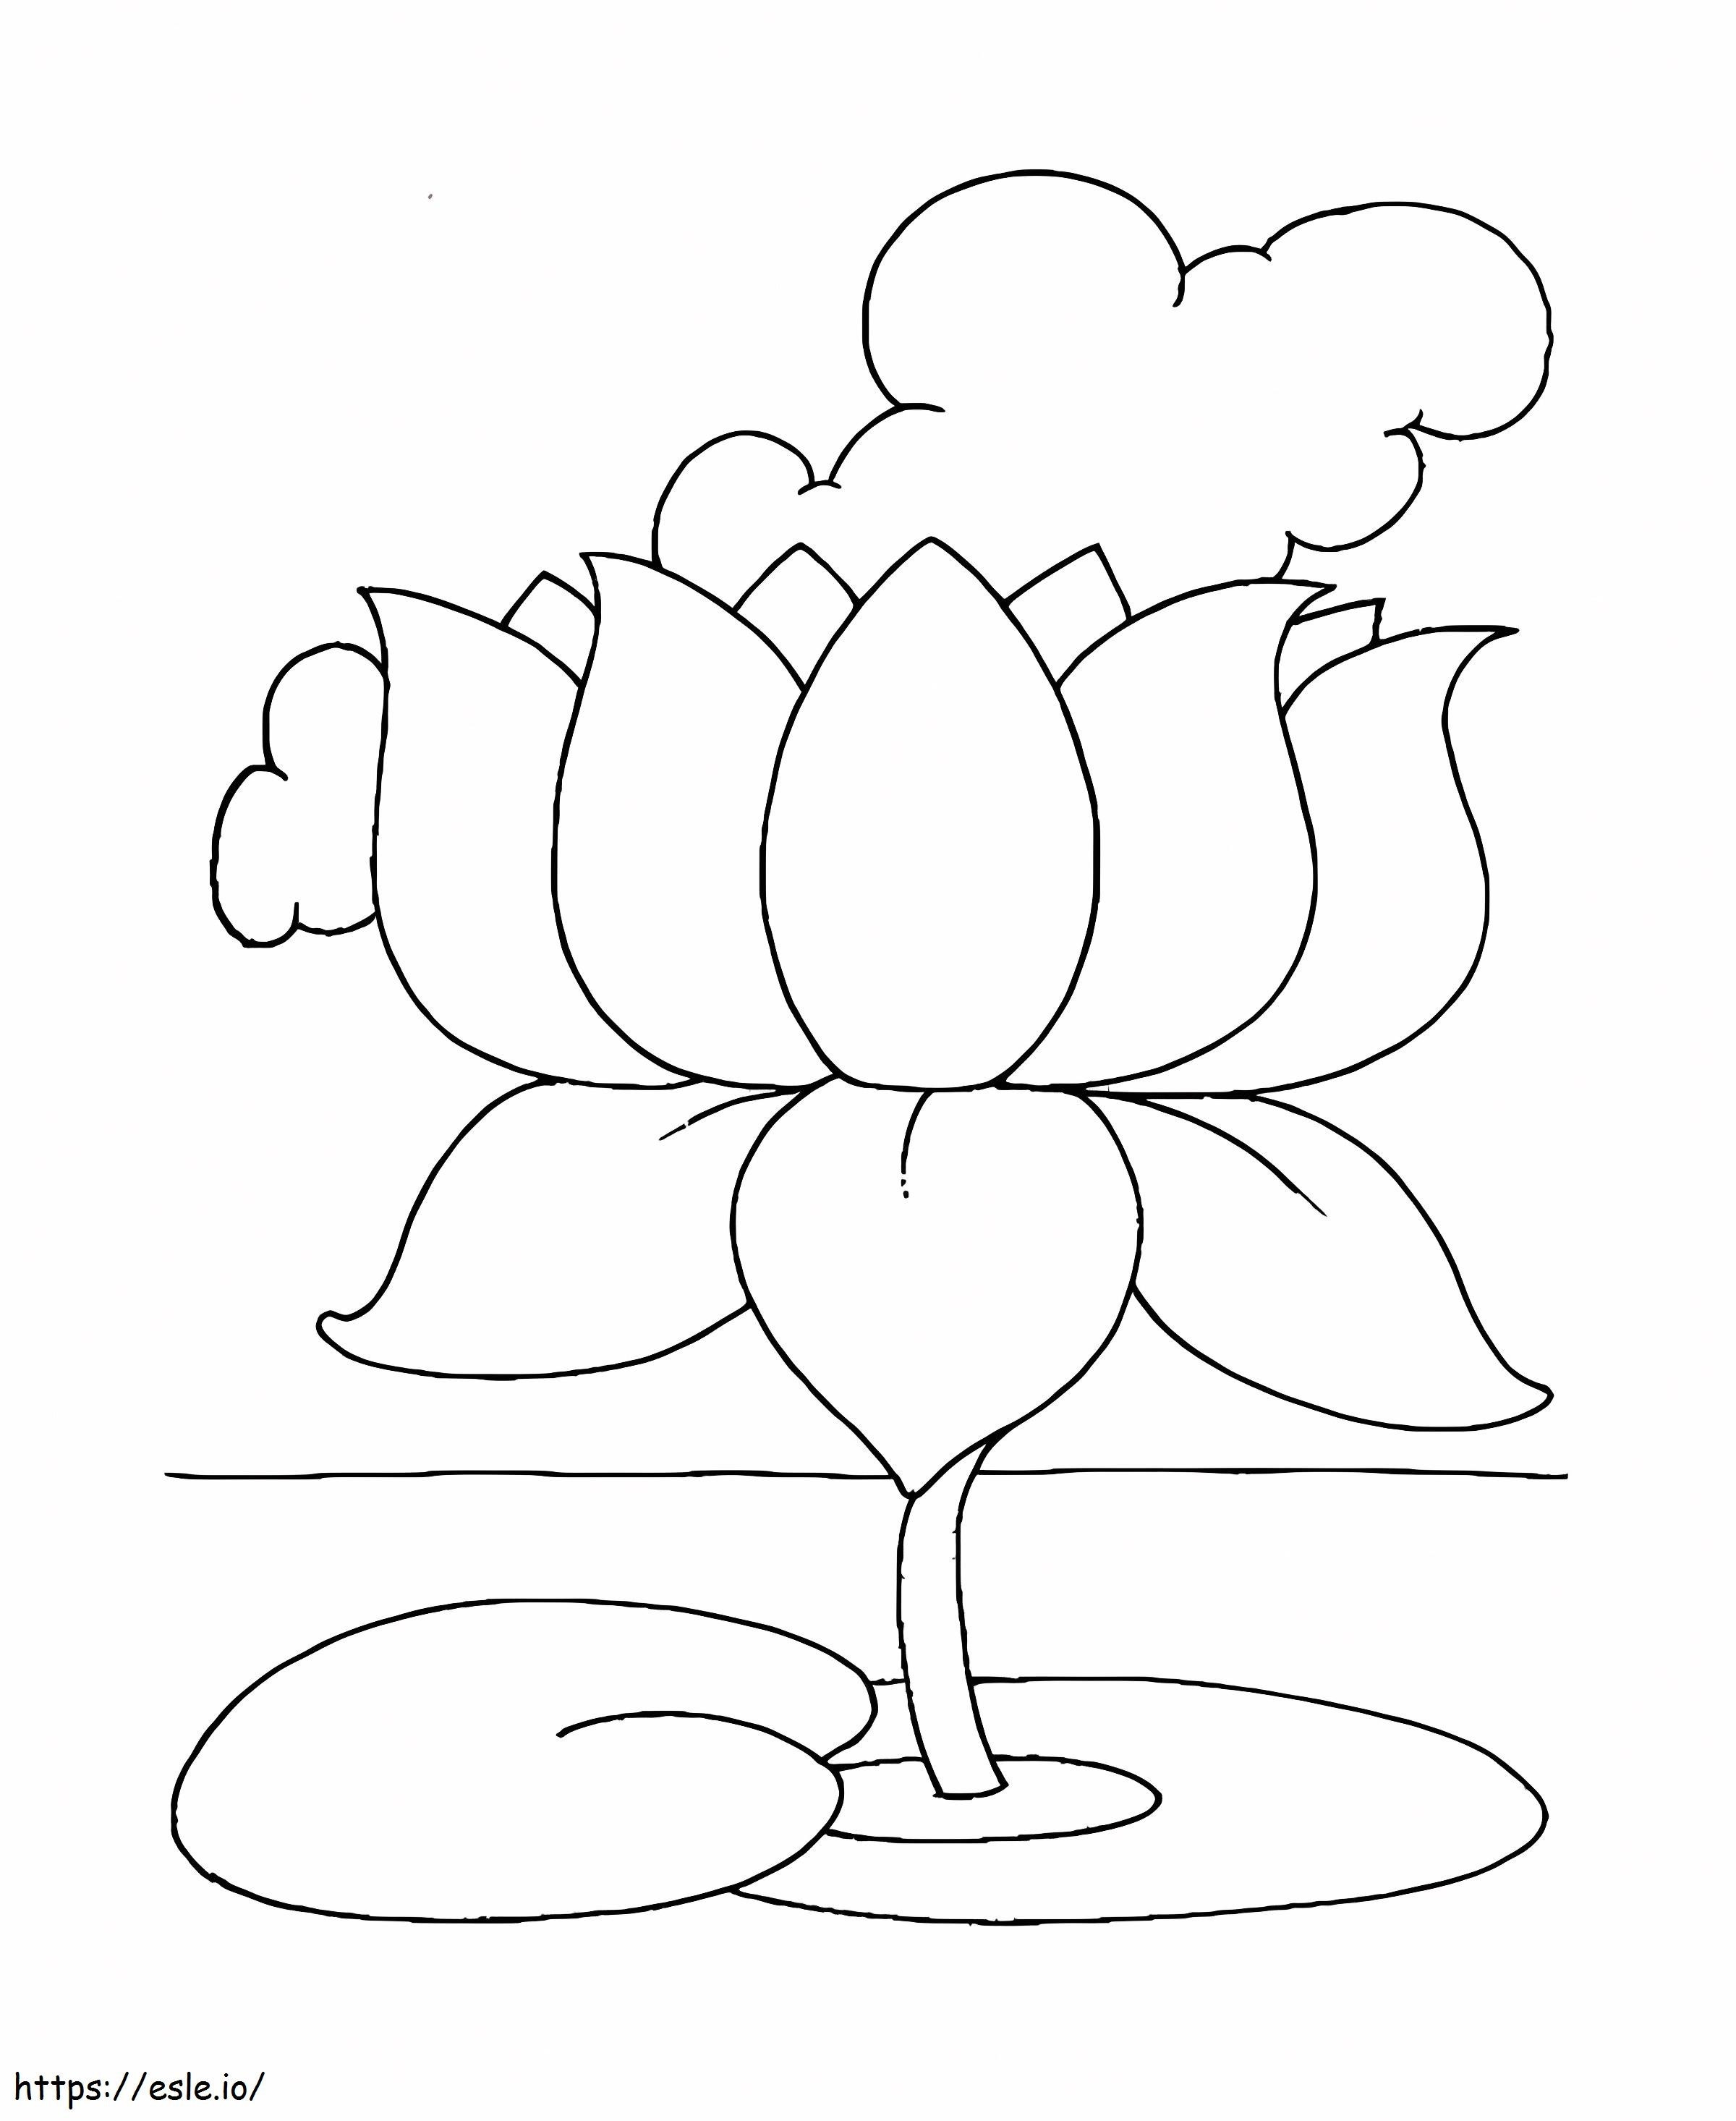 Coloriage Lotus facile à imprimer dessin